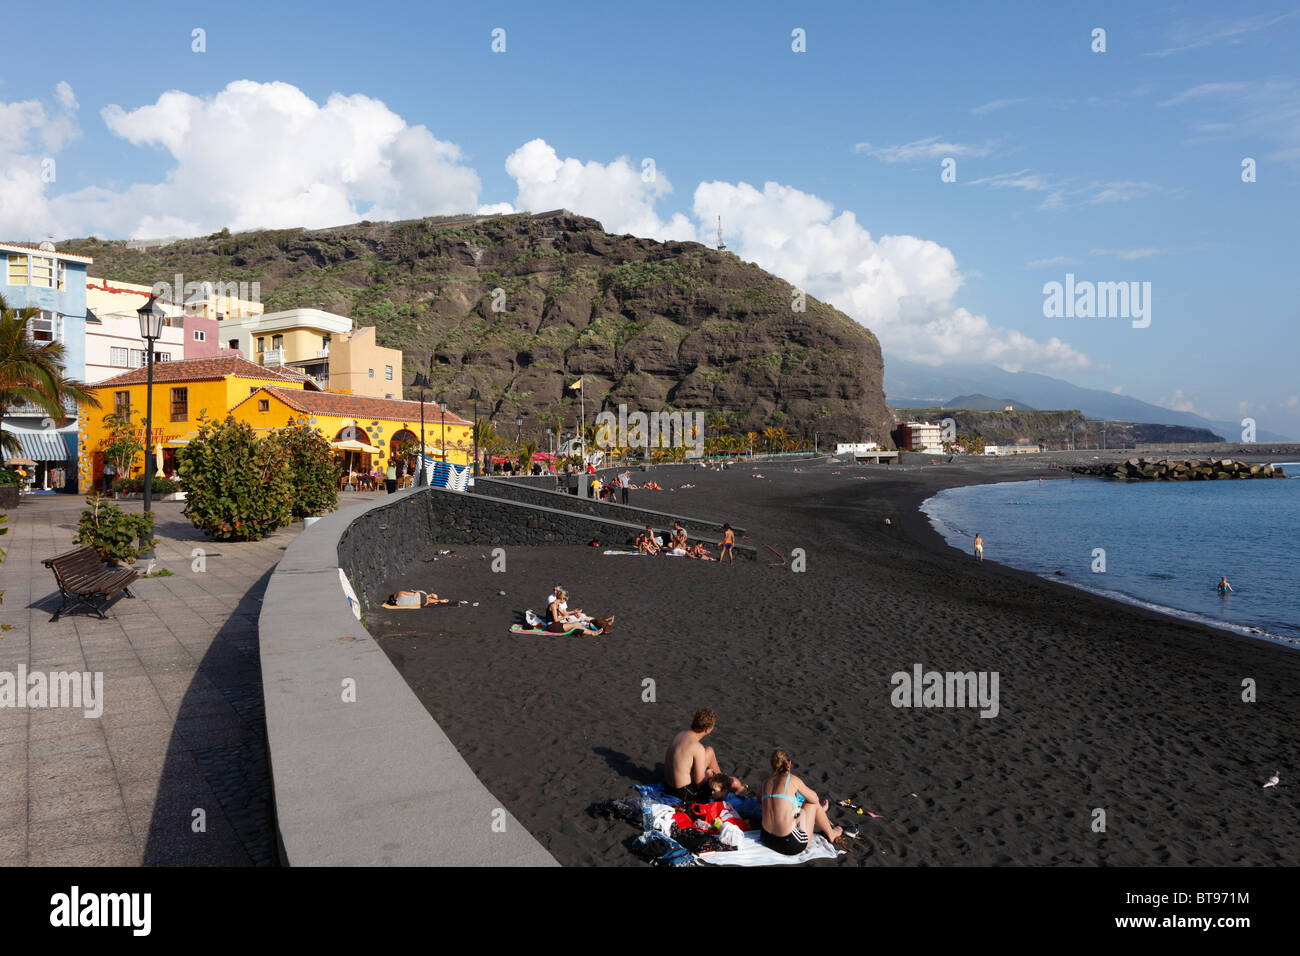 Puerto de Tazacorte, La Palma, Canary Islands, Spain, Europe Stock Photo